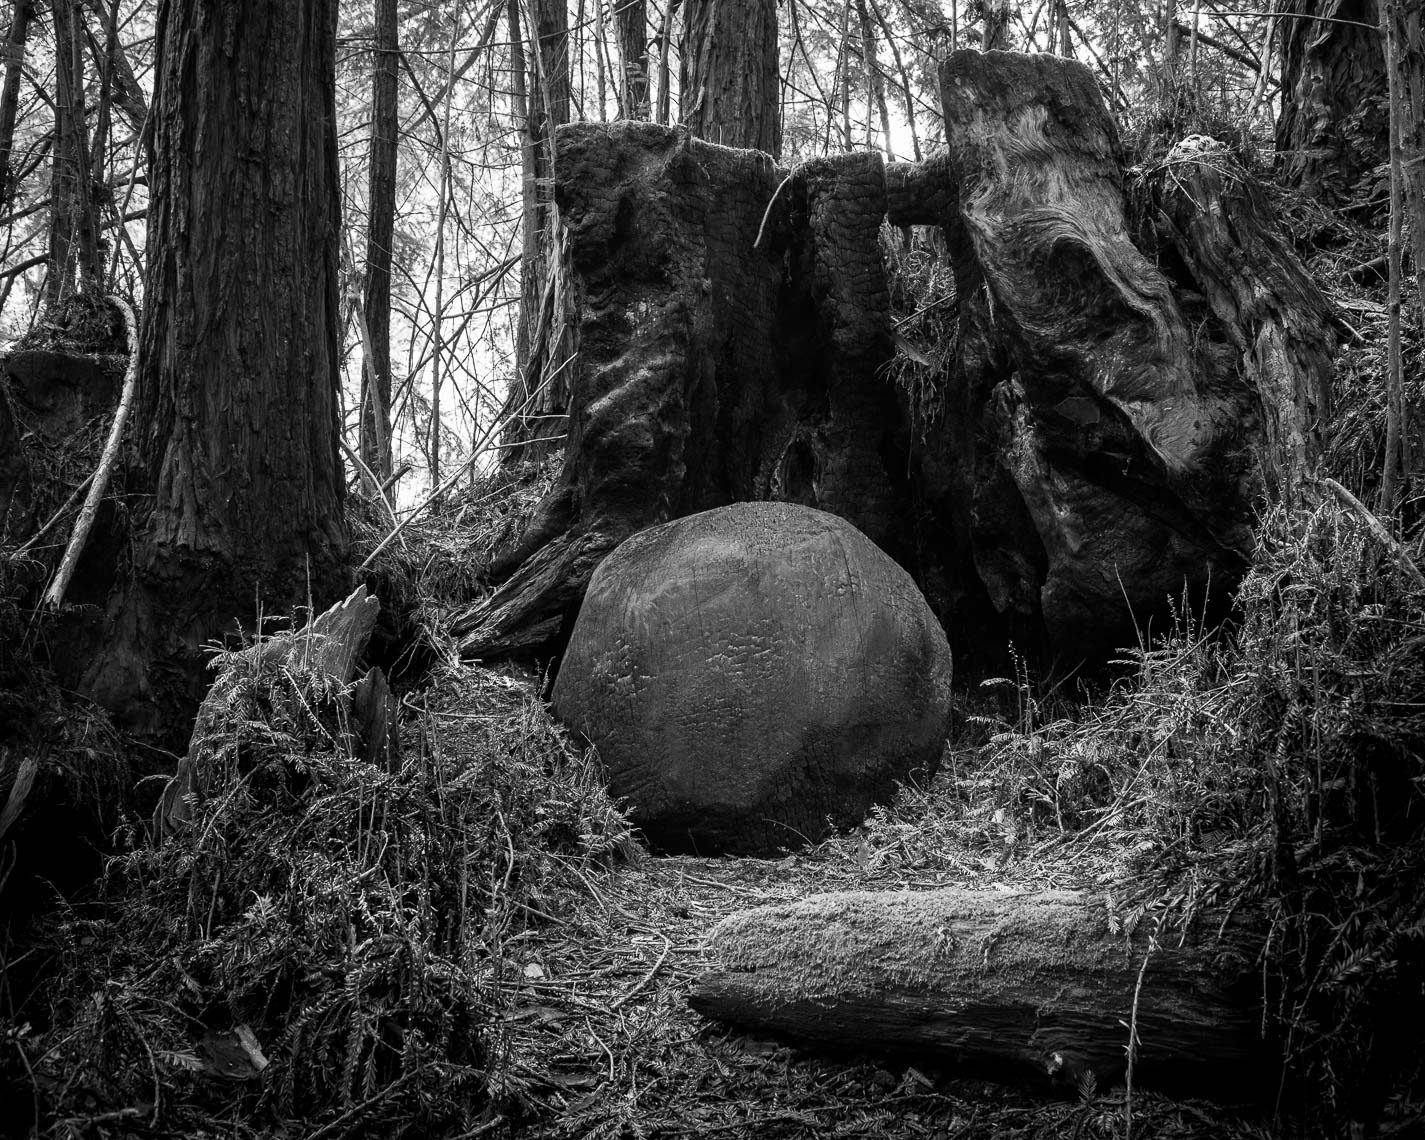 David Nash - Charred Sphere in Redwood Stumps, 1989